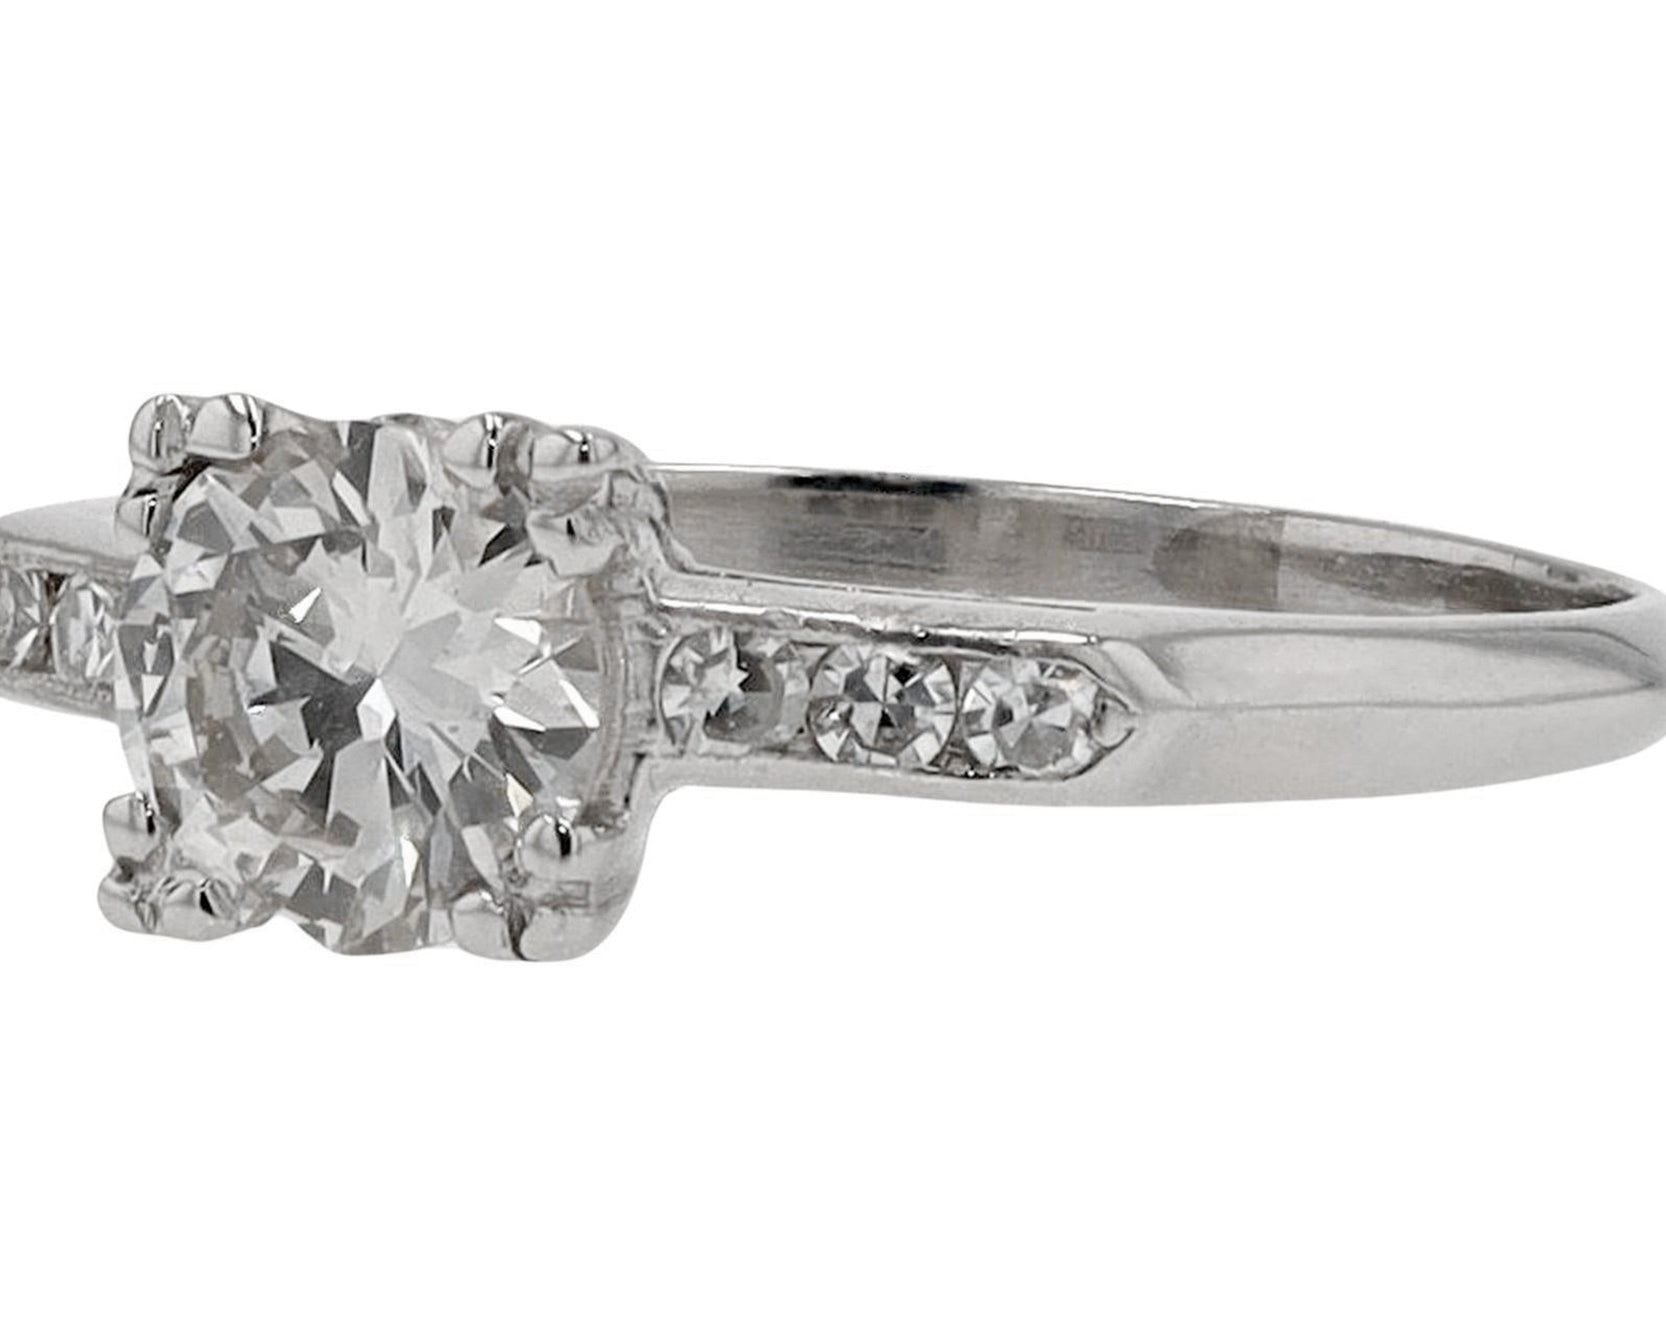 Vintage 1 Carat Diamond Ring